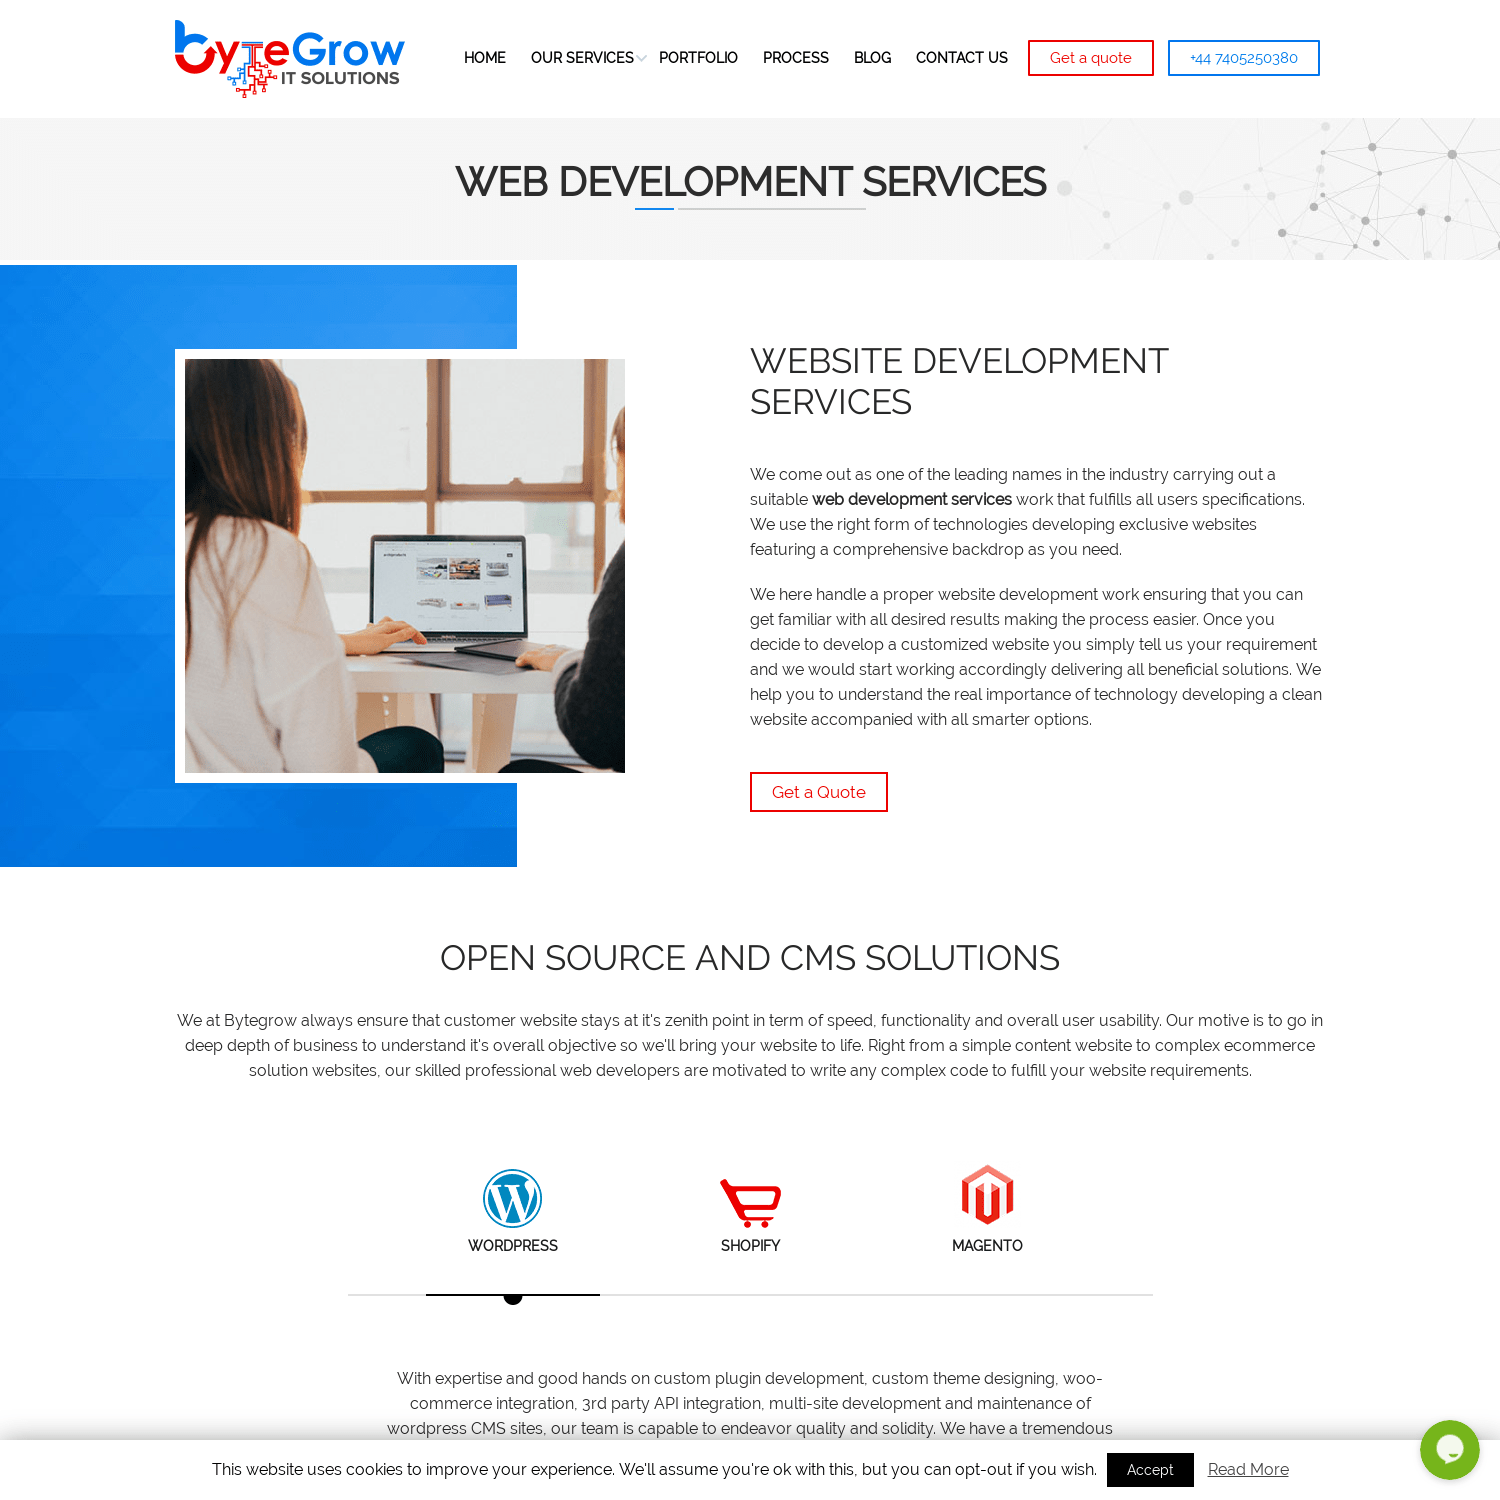 https://www.bytegrow.co.uk/web-development-services